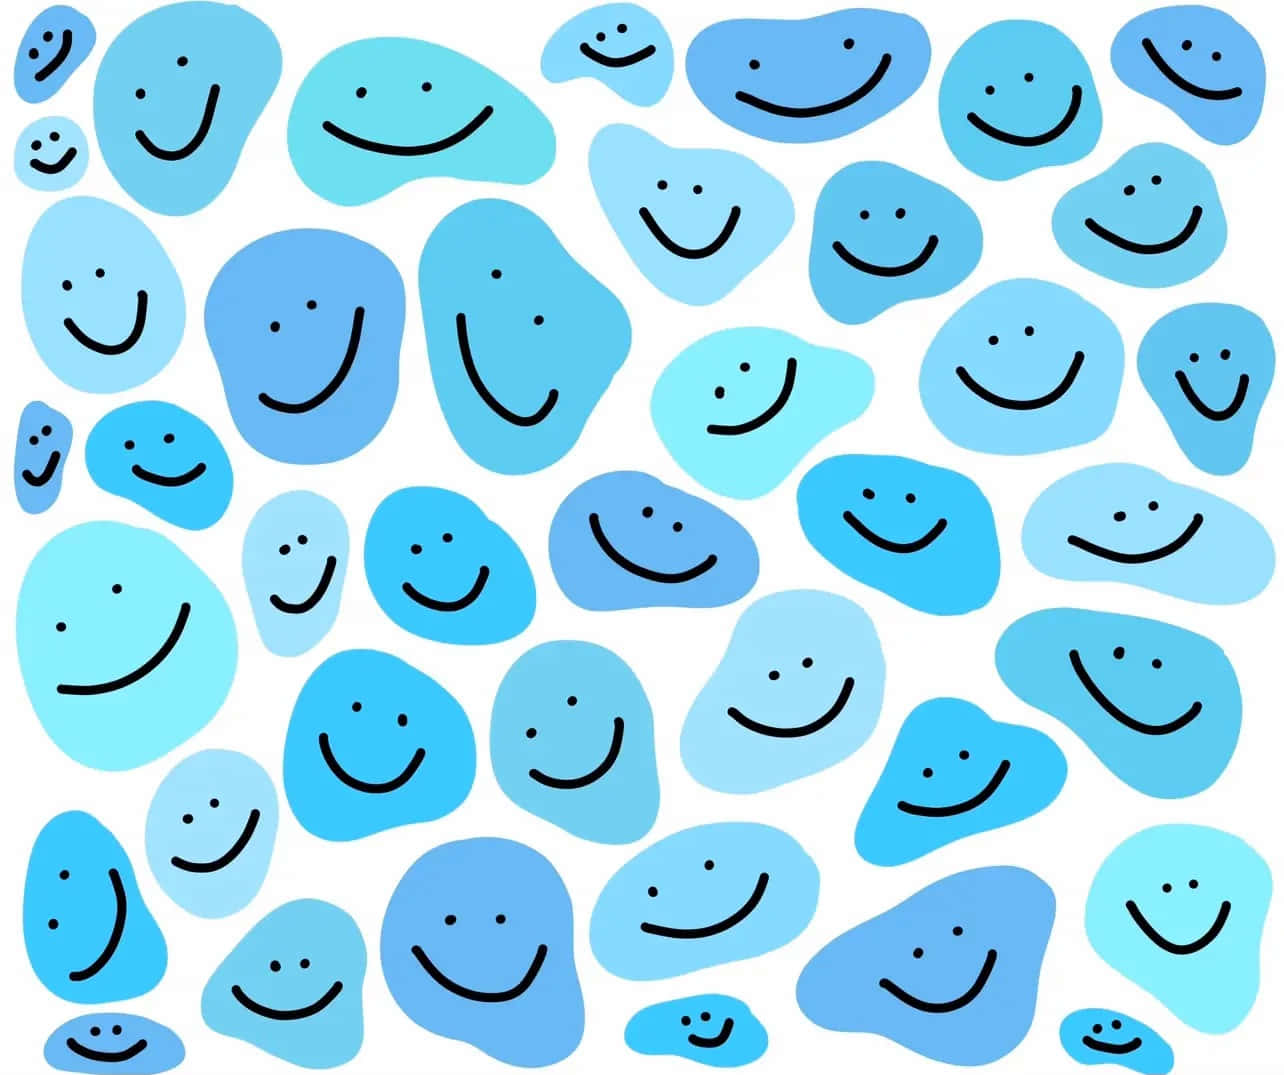 Blue Smiley Faces Pattern.jpg Wallpaper